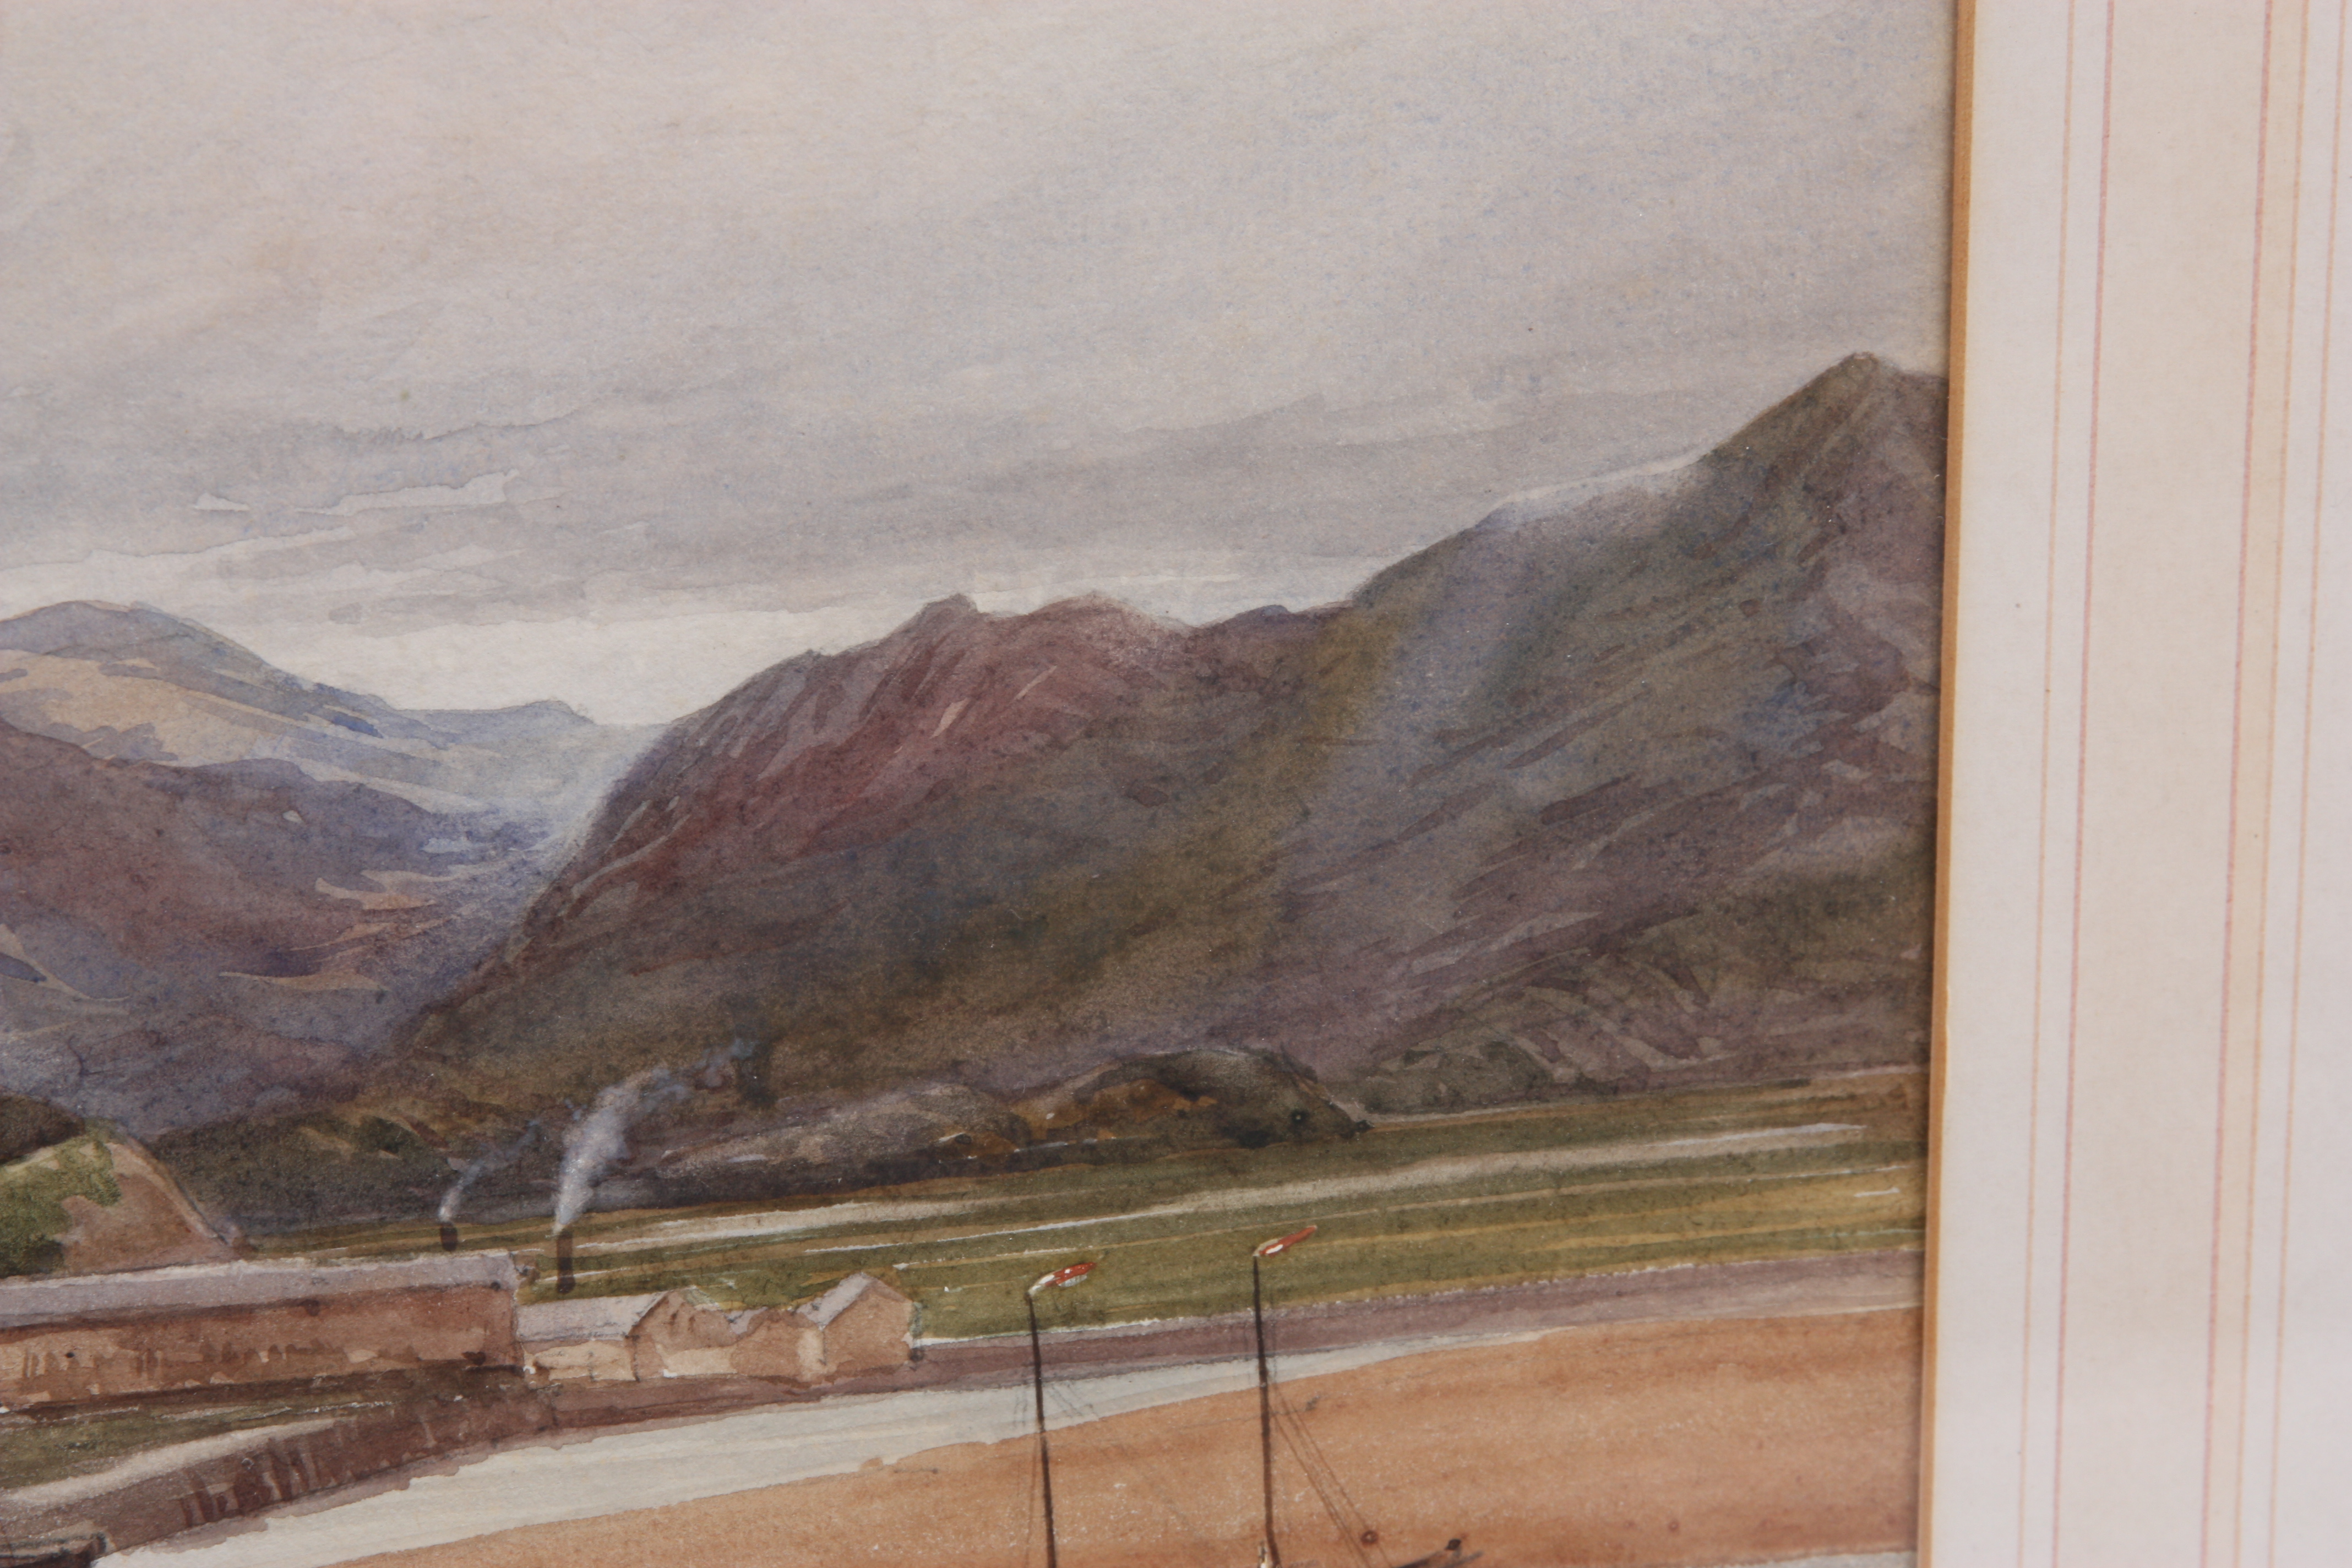 E. NICHOLSON 1870 WATERCOLOUR Landscape scene with estuary and boats 24.5cm high 45cm wide - - Image 4 of 5